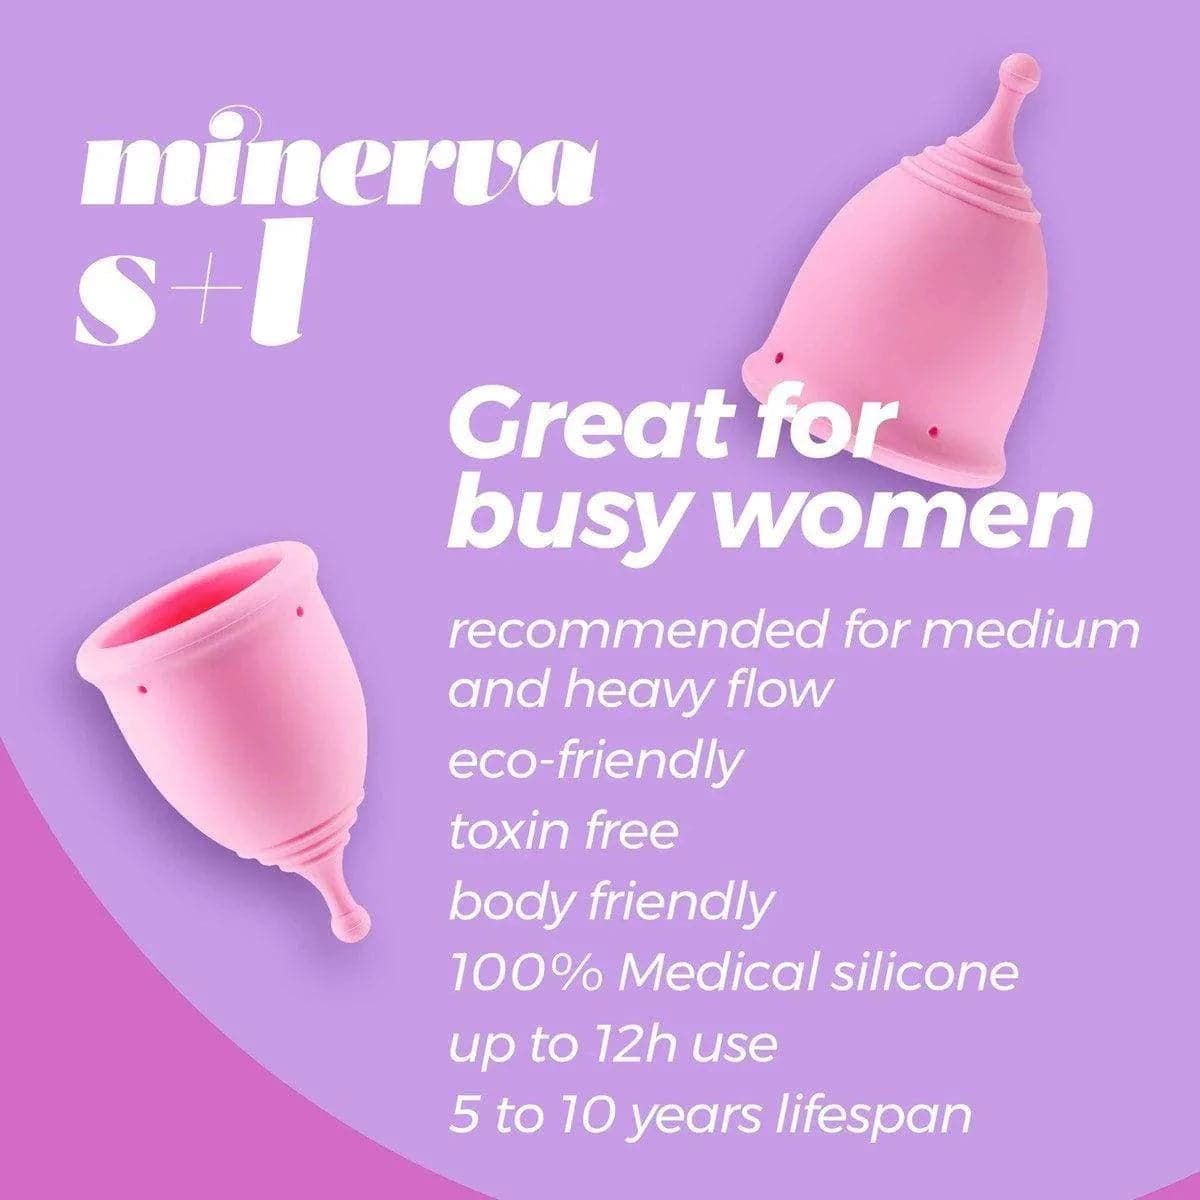 Copo Menstrual Minerva S + L 100% Silicone, 2un 23-30ml, 6.9cm Ø4.7cm - Pérola SexShop